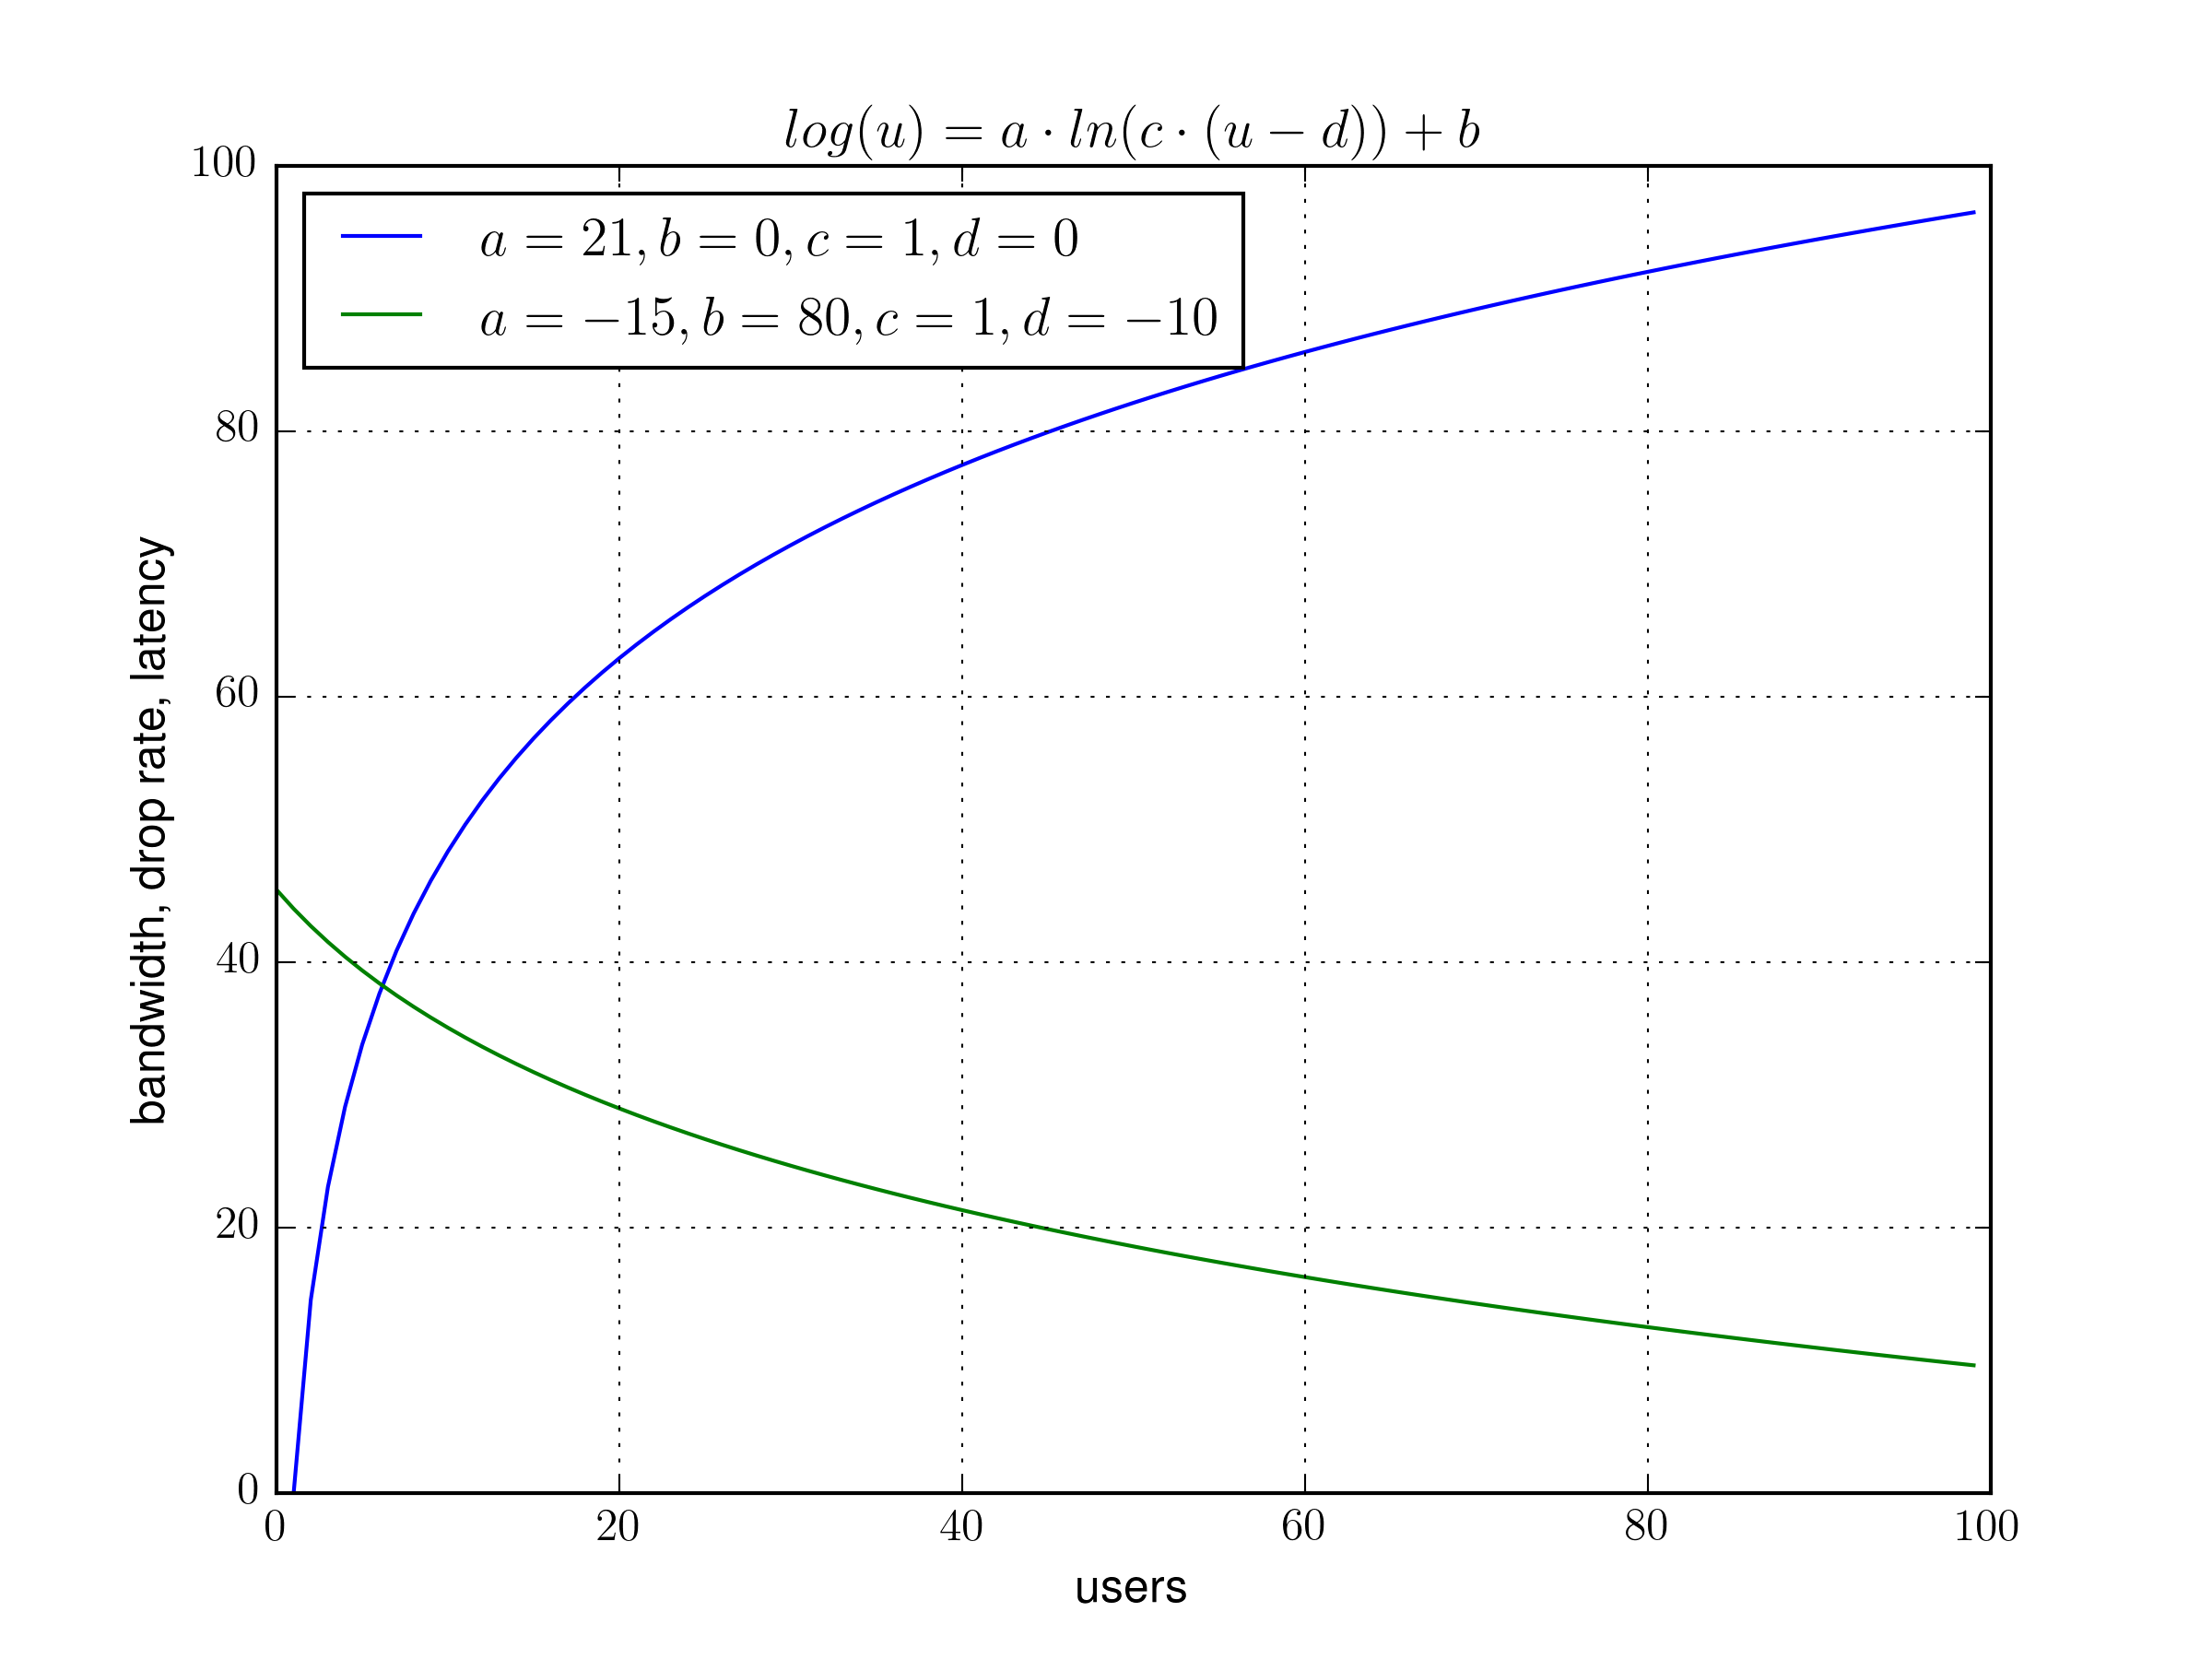 src/de/tud/kom/p2psim/impl/topology/views/fiveg/models/img/logarithmic.png